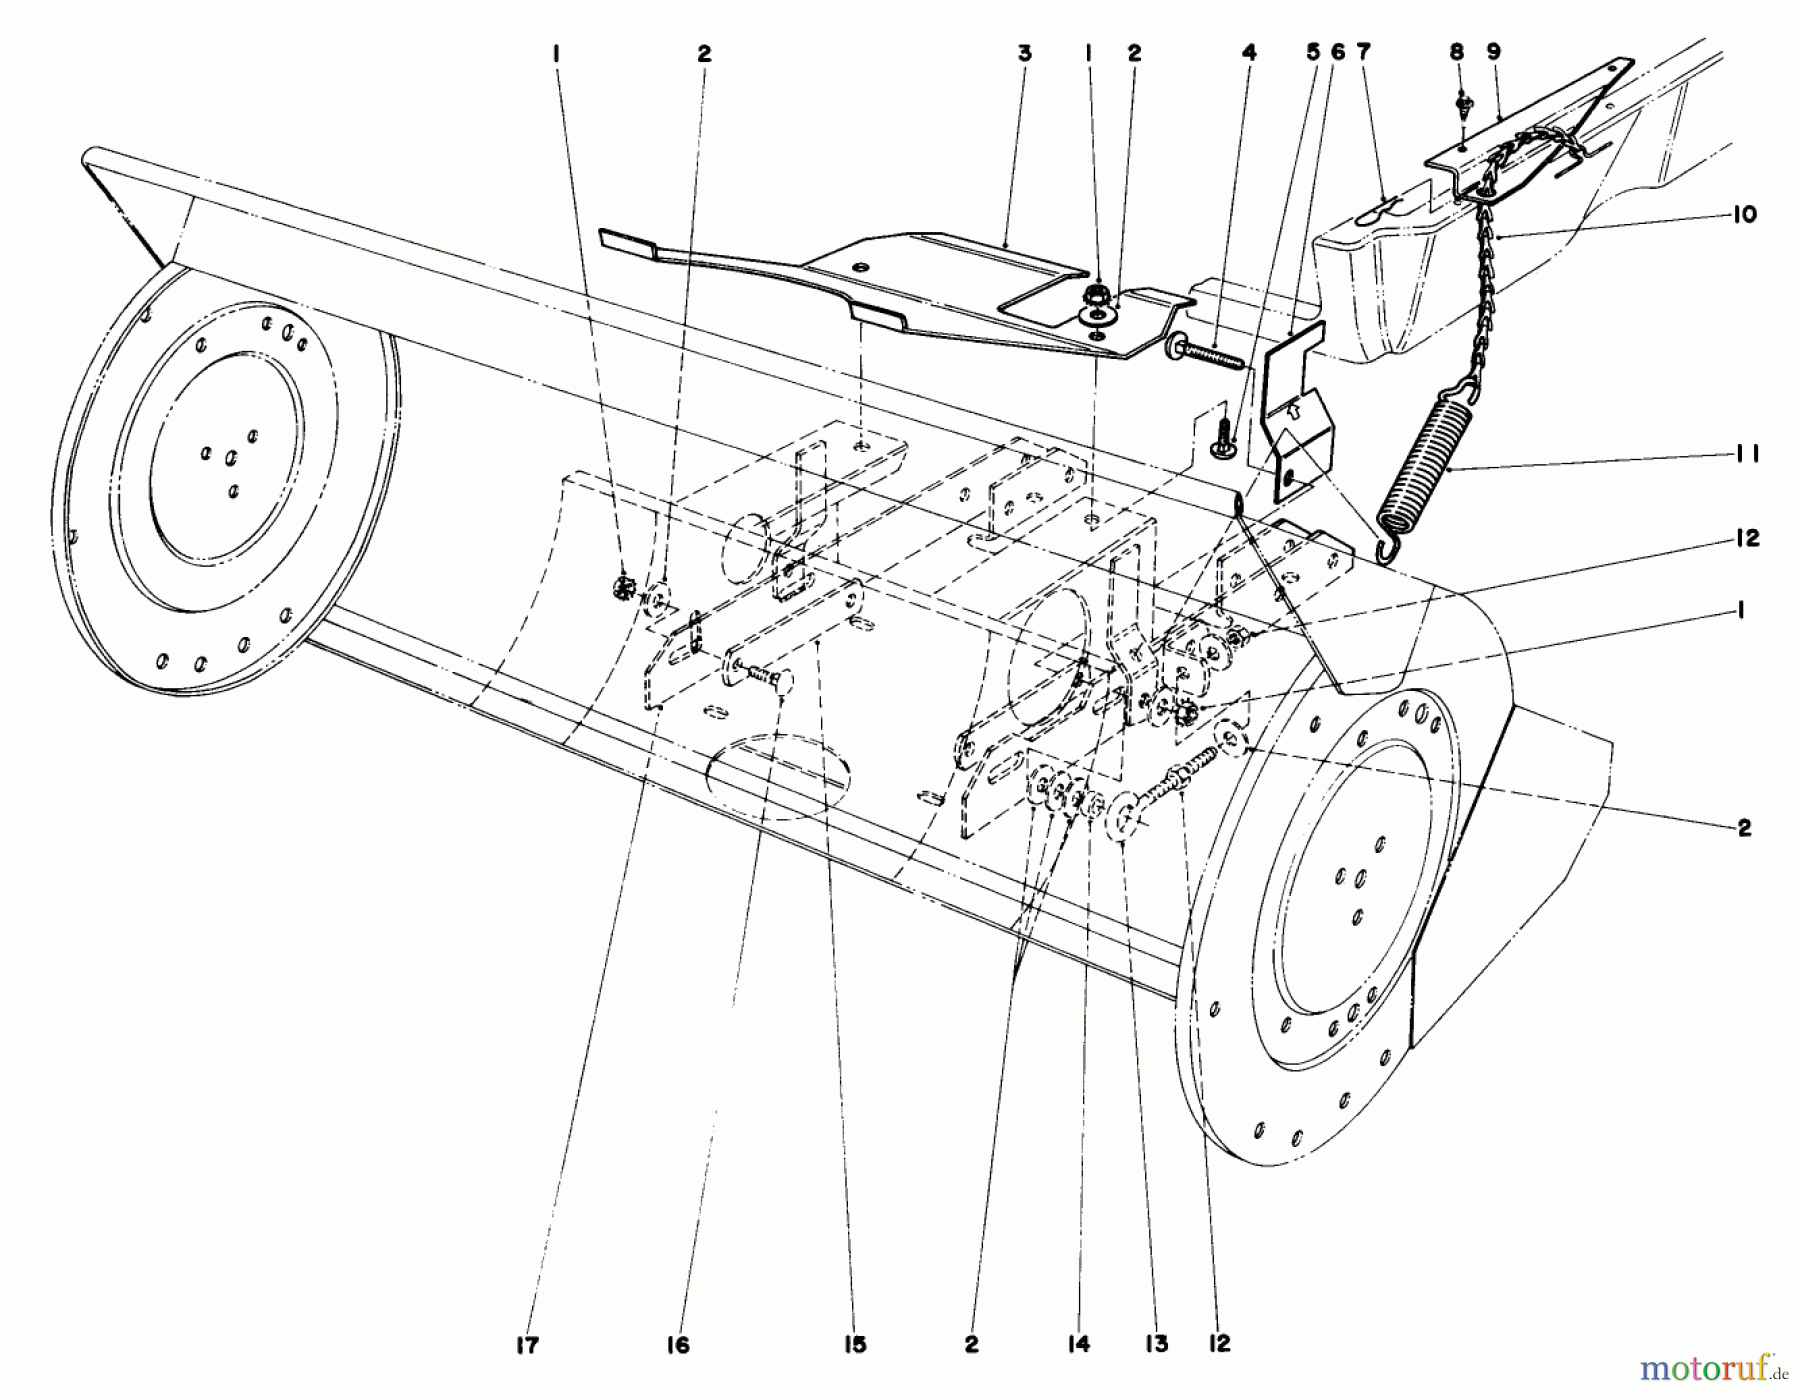  Toro Neu Mowers, Lawn & Garden Tractor Seite 1 57357 (11-44) - Toro 11-44 Lawn Tractor, 1983 (3000001-3999999) 36